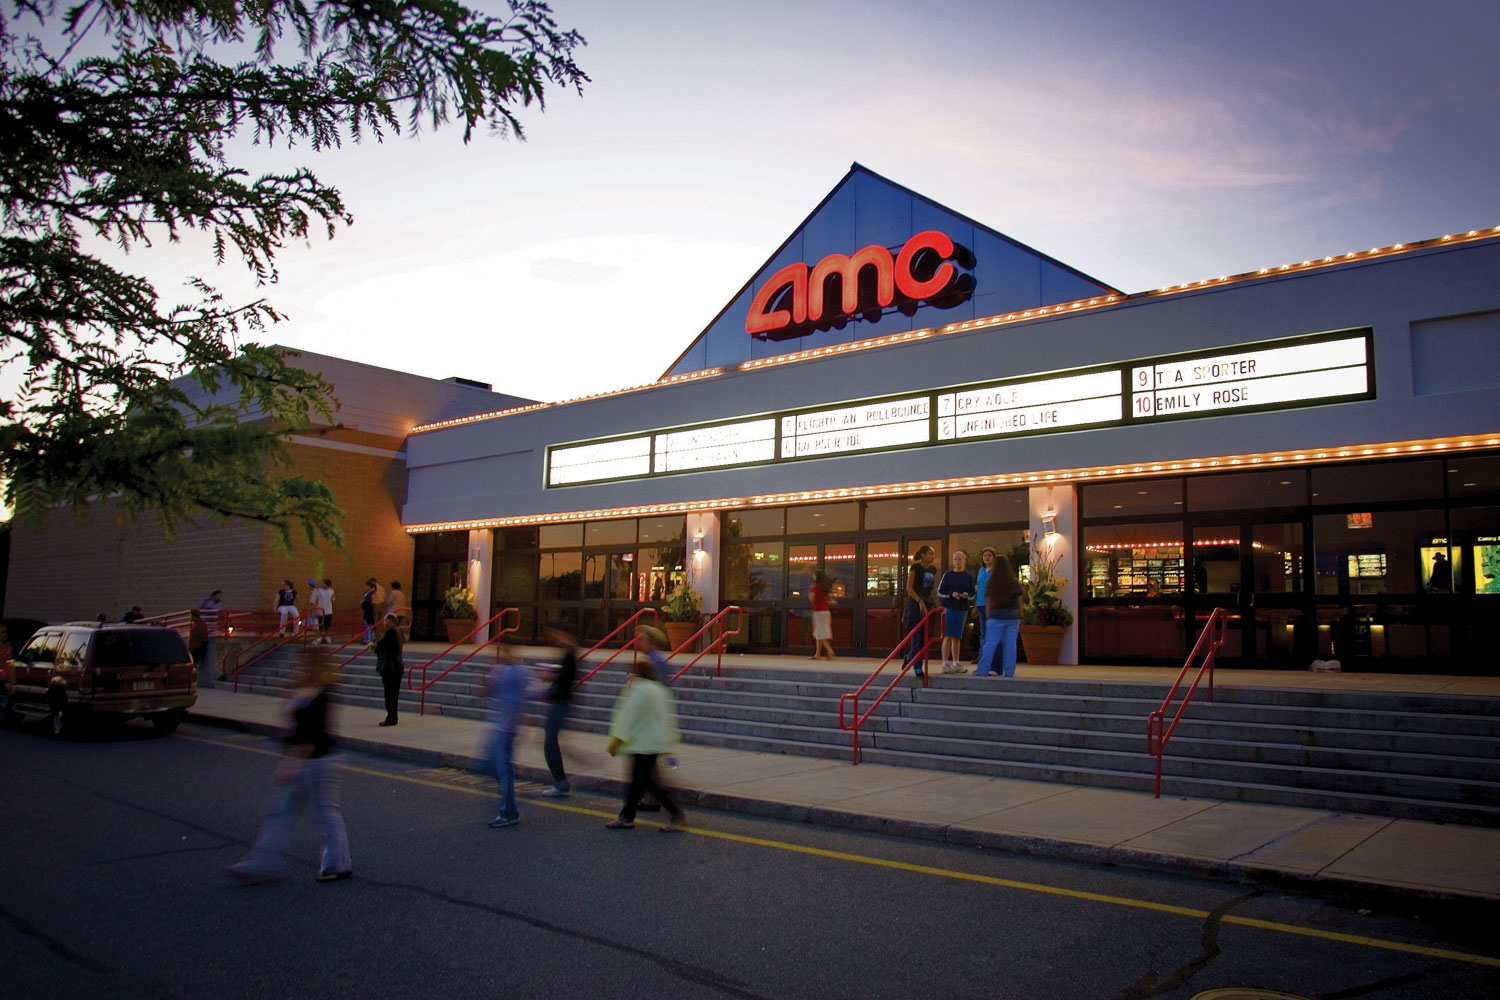 Burlington 10 Cinema - The Davis Companies